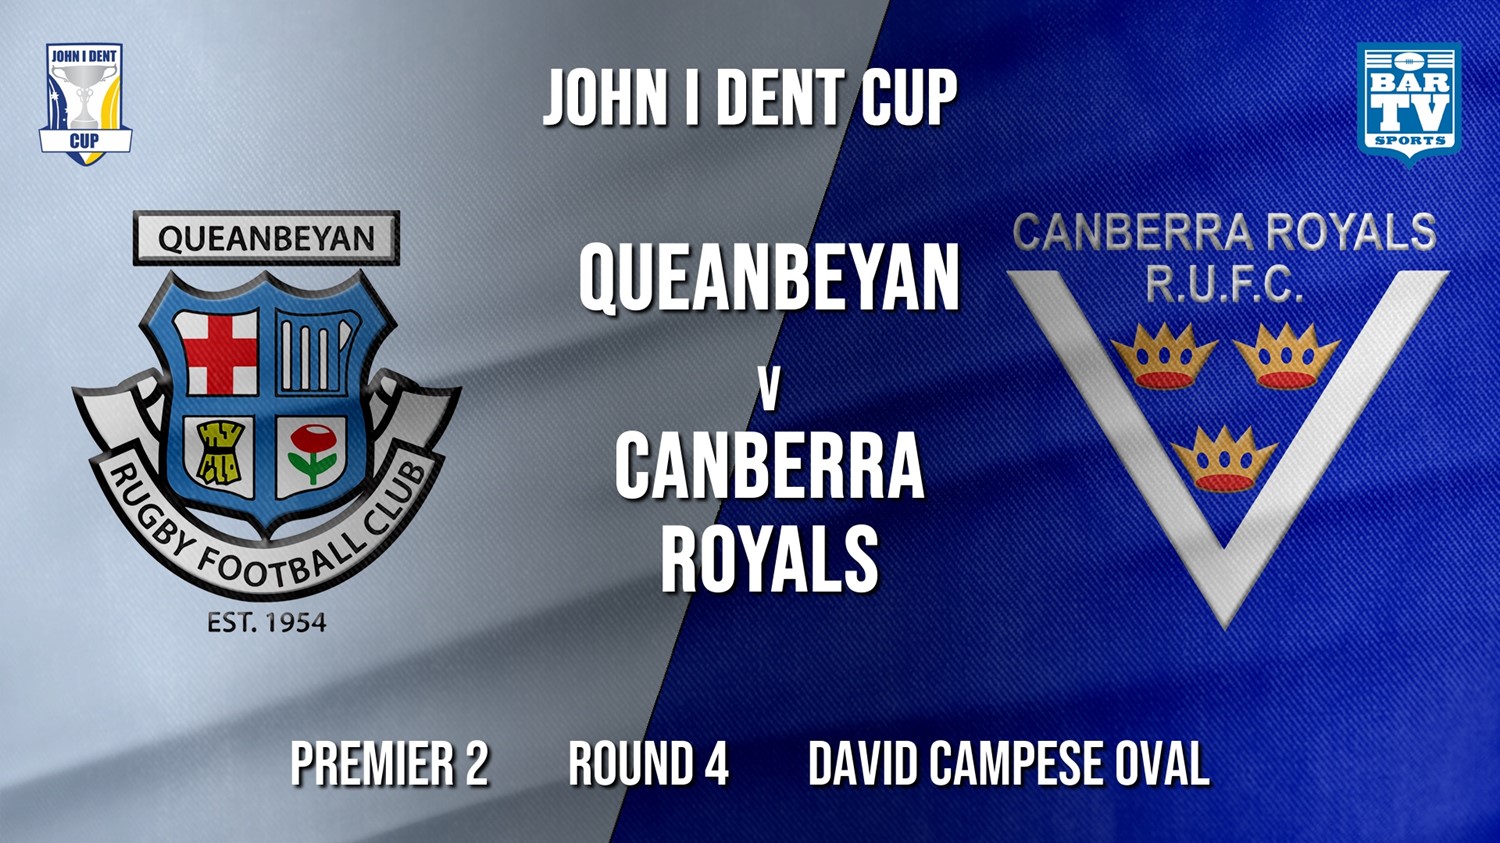 John I Dent Round 4 - Premier 2 - Queanbeyan Whites v Canberra Royals Minigame Slate Image